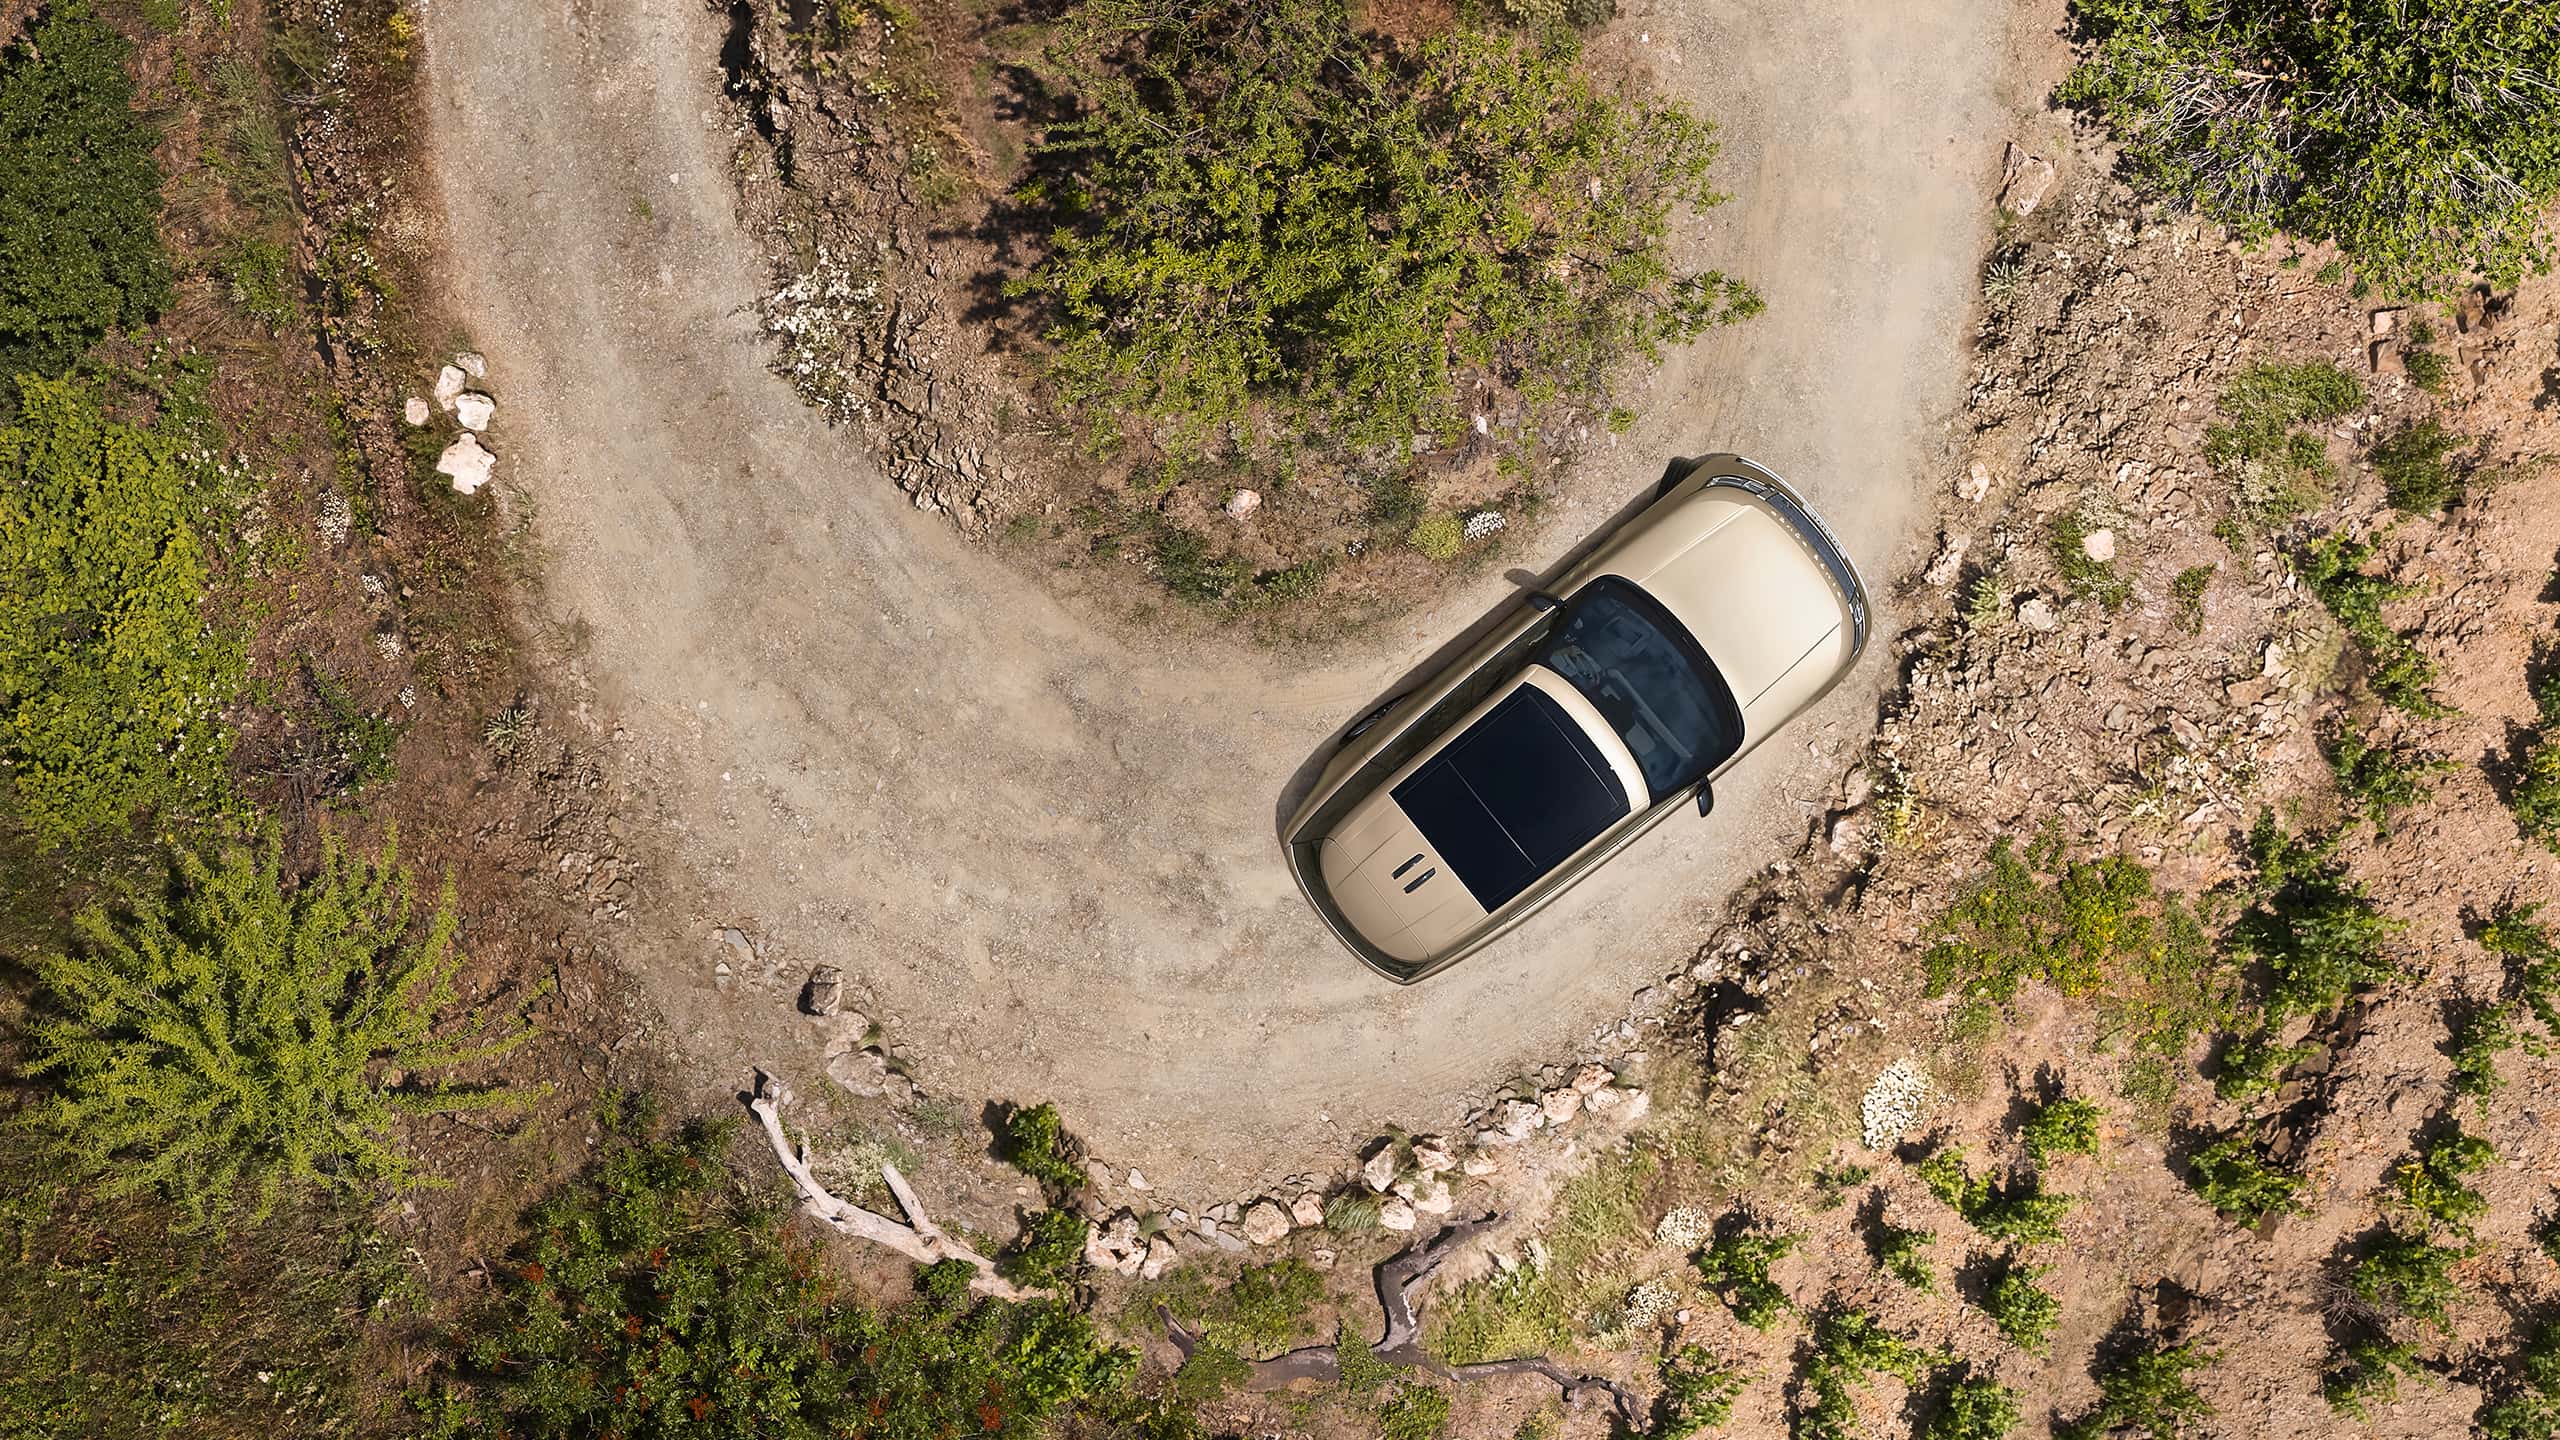 New Range Rover off-road capability